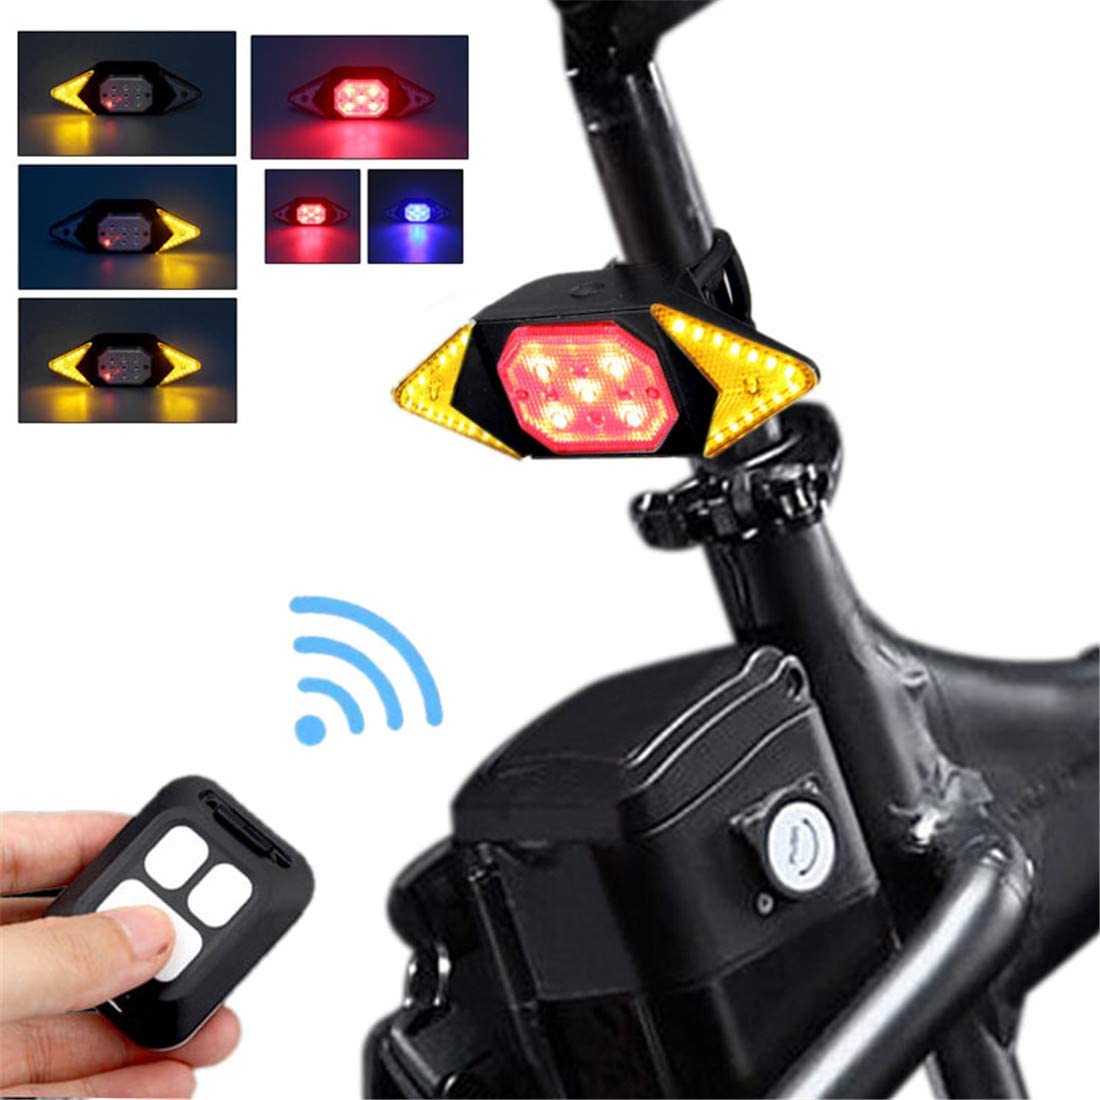 Bike tail light with turn signal